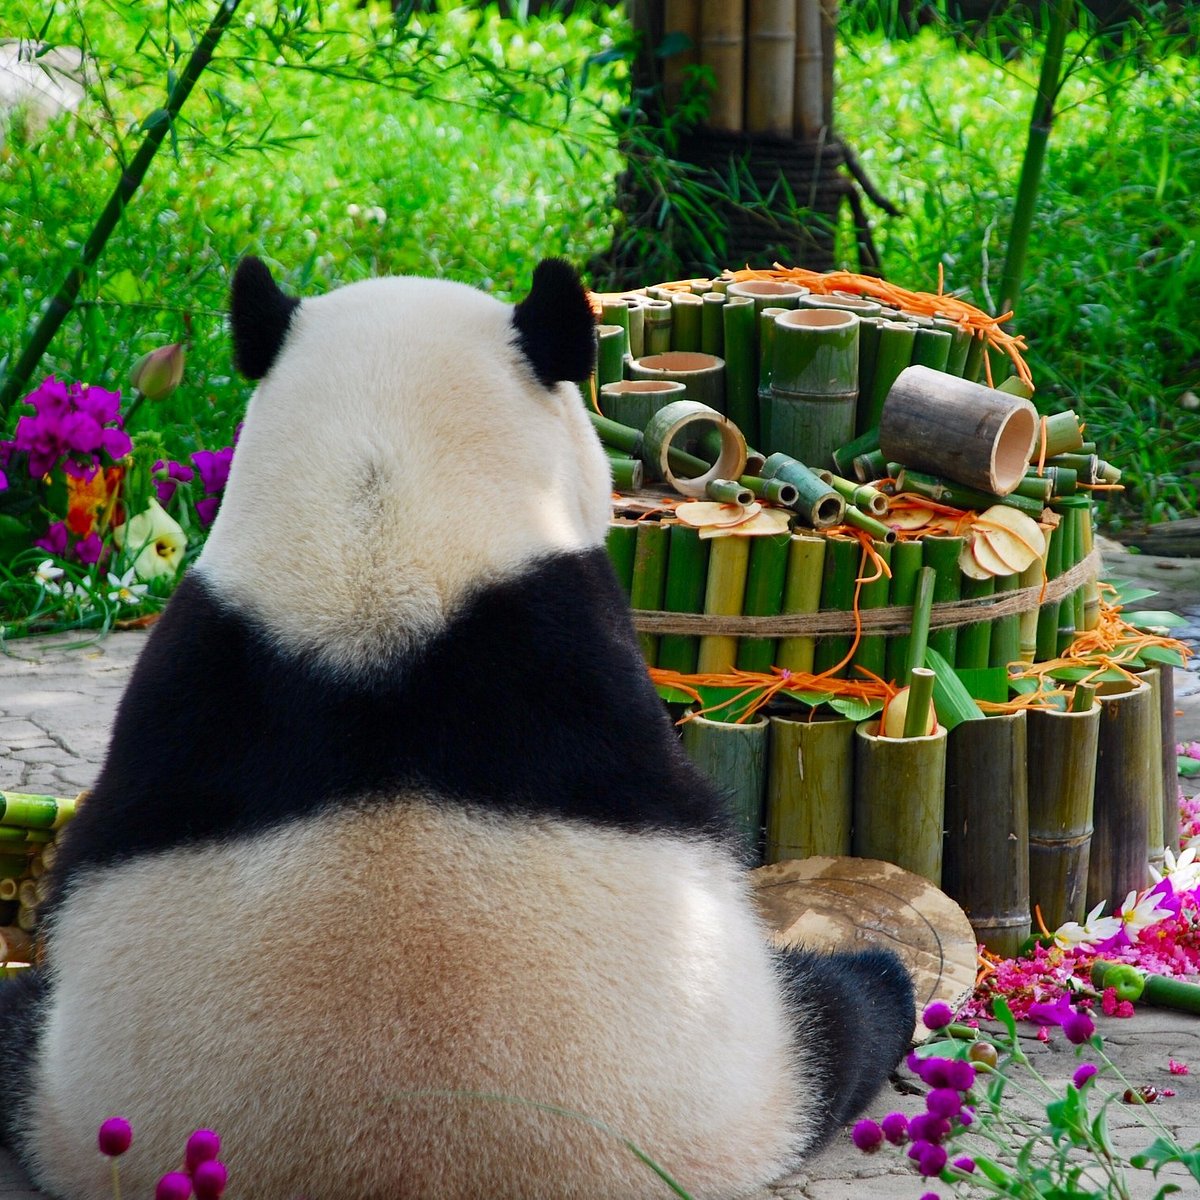 my panda tours